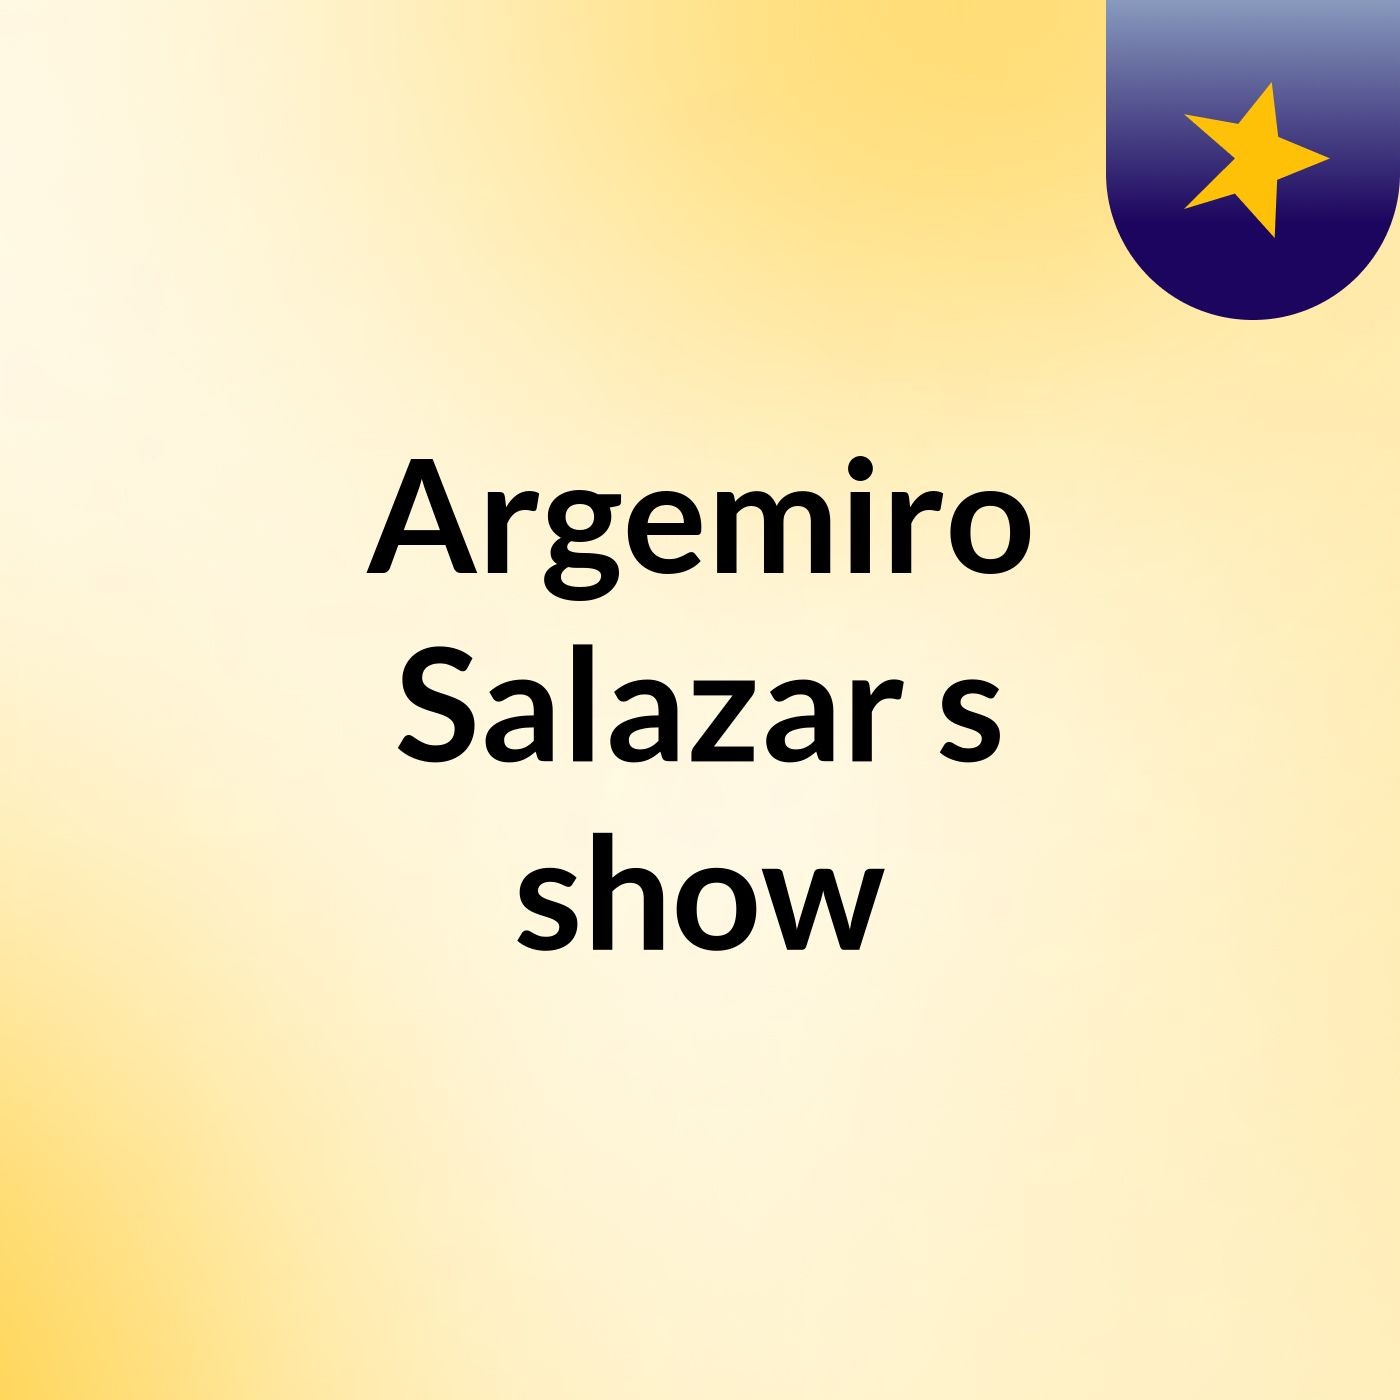 Argemiro Salazar's show